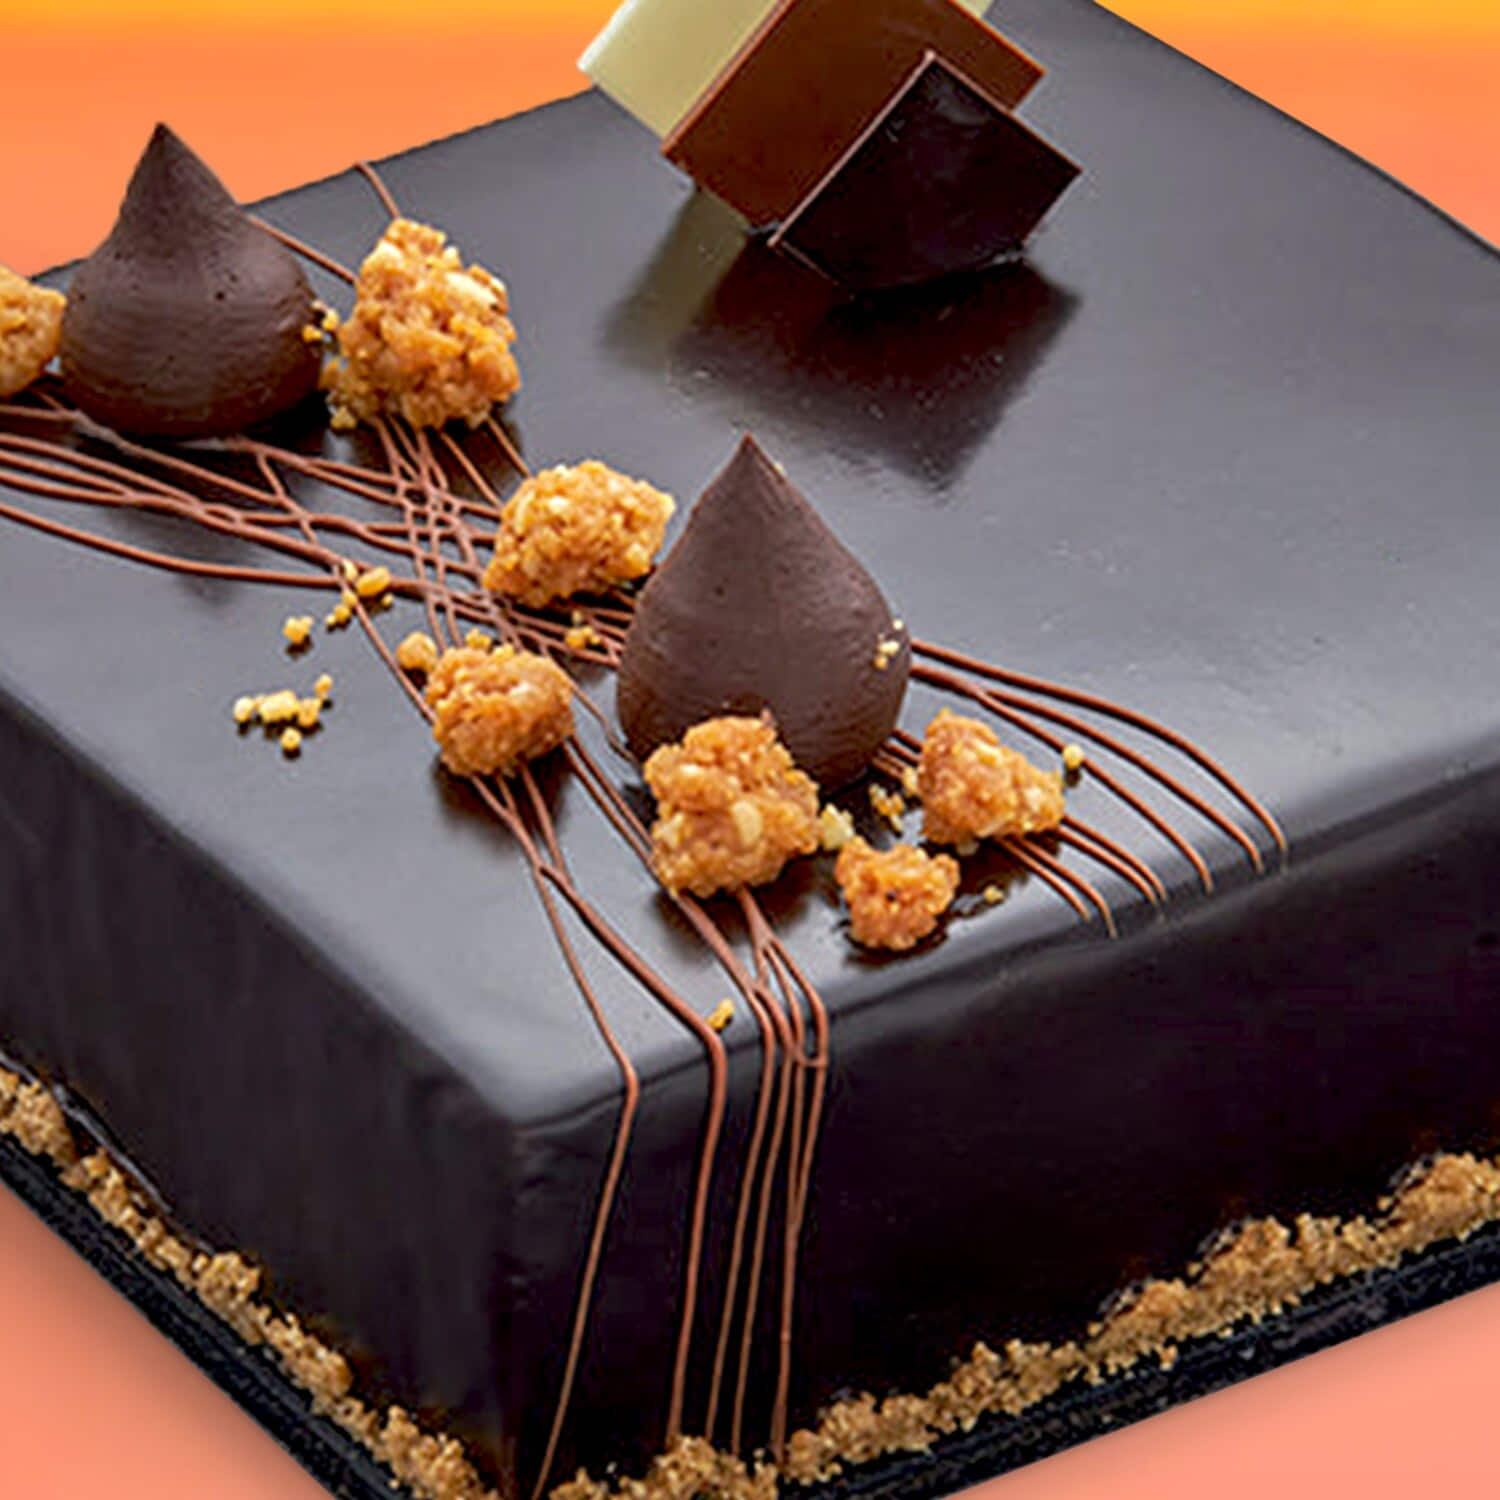 Chocolate Truffle Cake Recipe: How to Make It